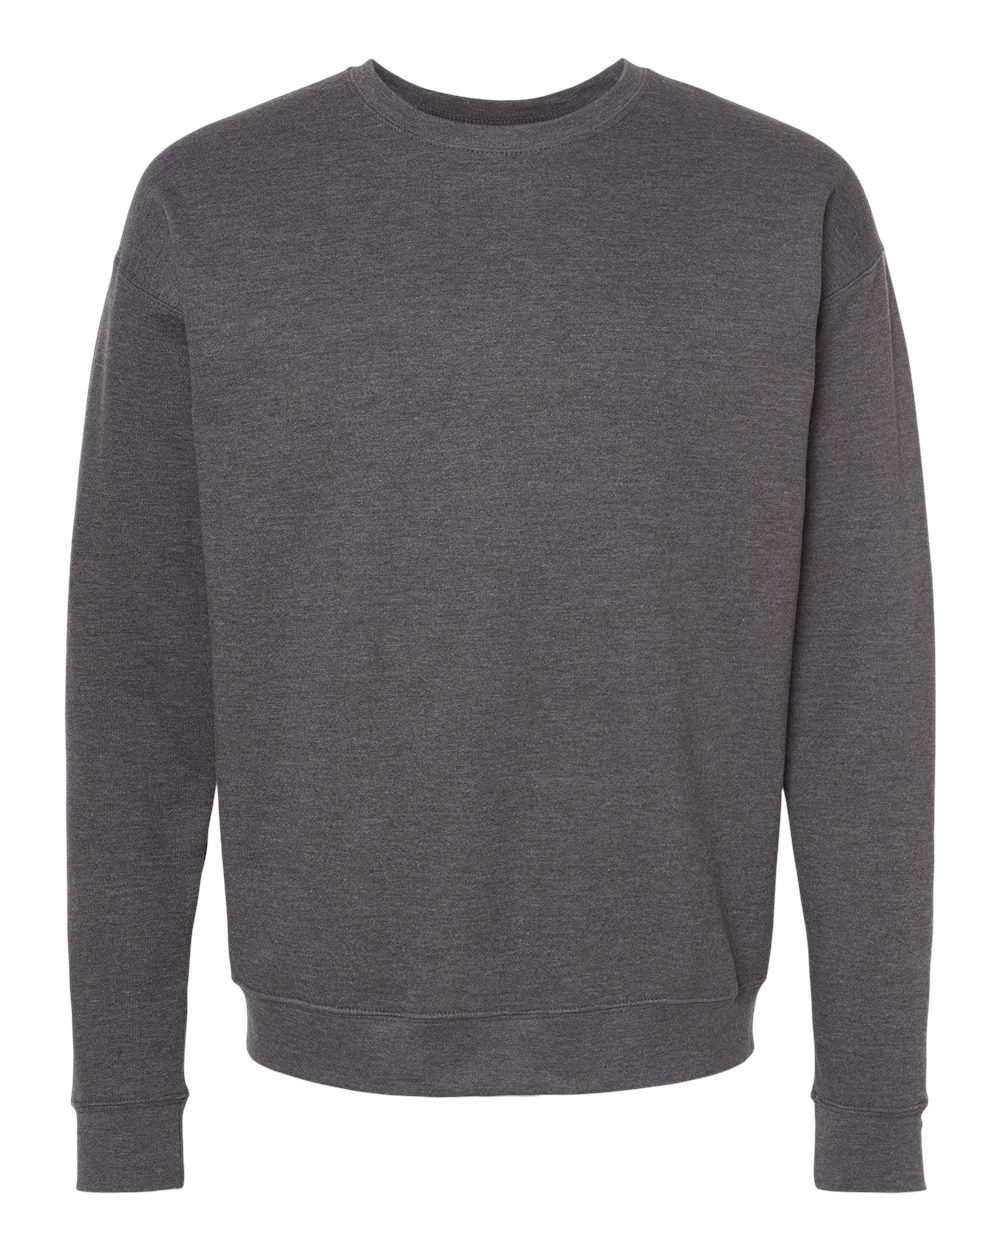 Tultex Men Fleece Crewneck Sweatshirt 340 Up To 3XL | eBay